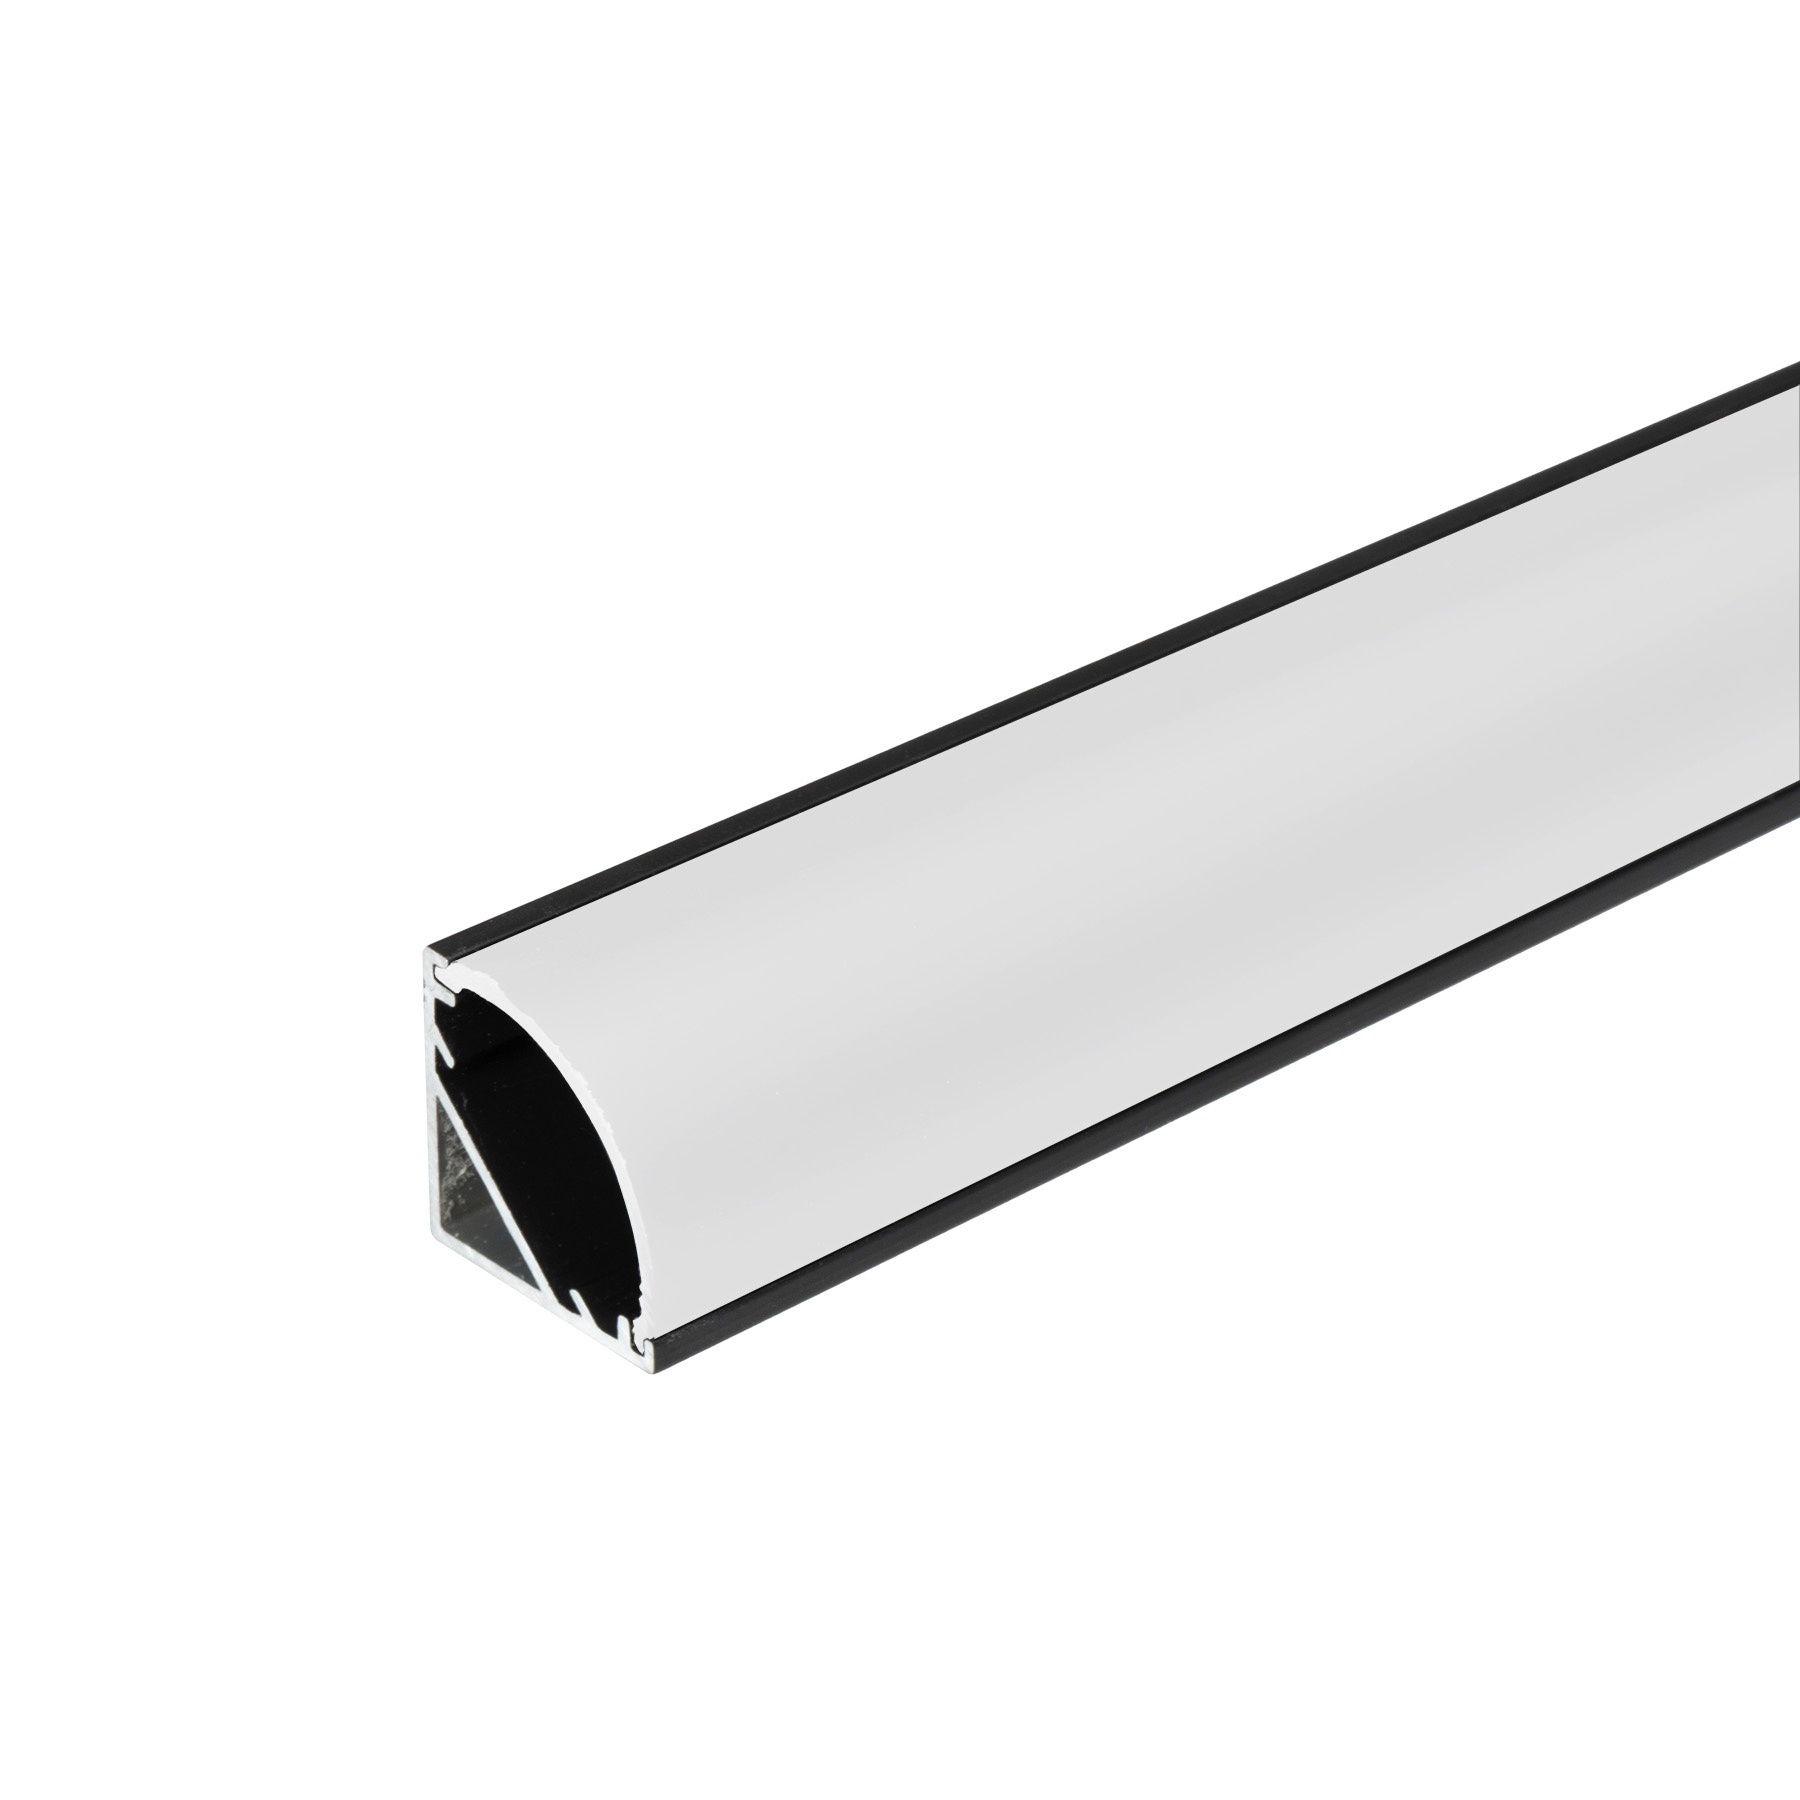 Profilé ruban LED Felita aluminium extra plat 1m avec couvercle transparent